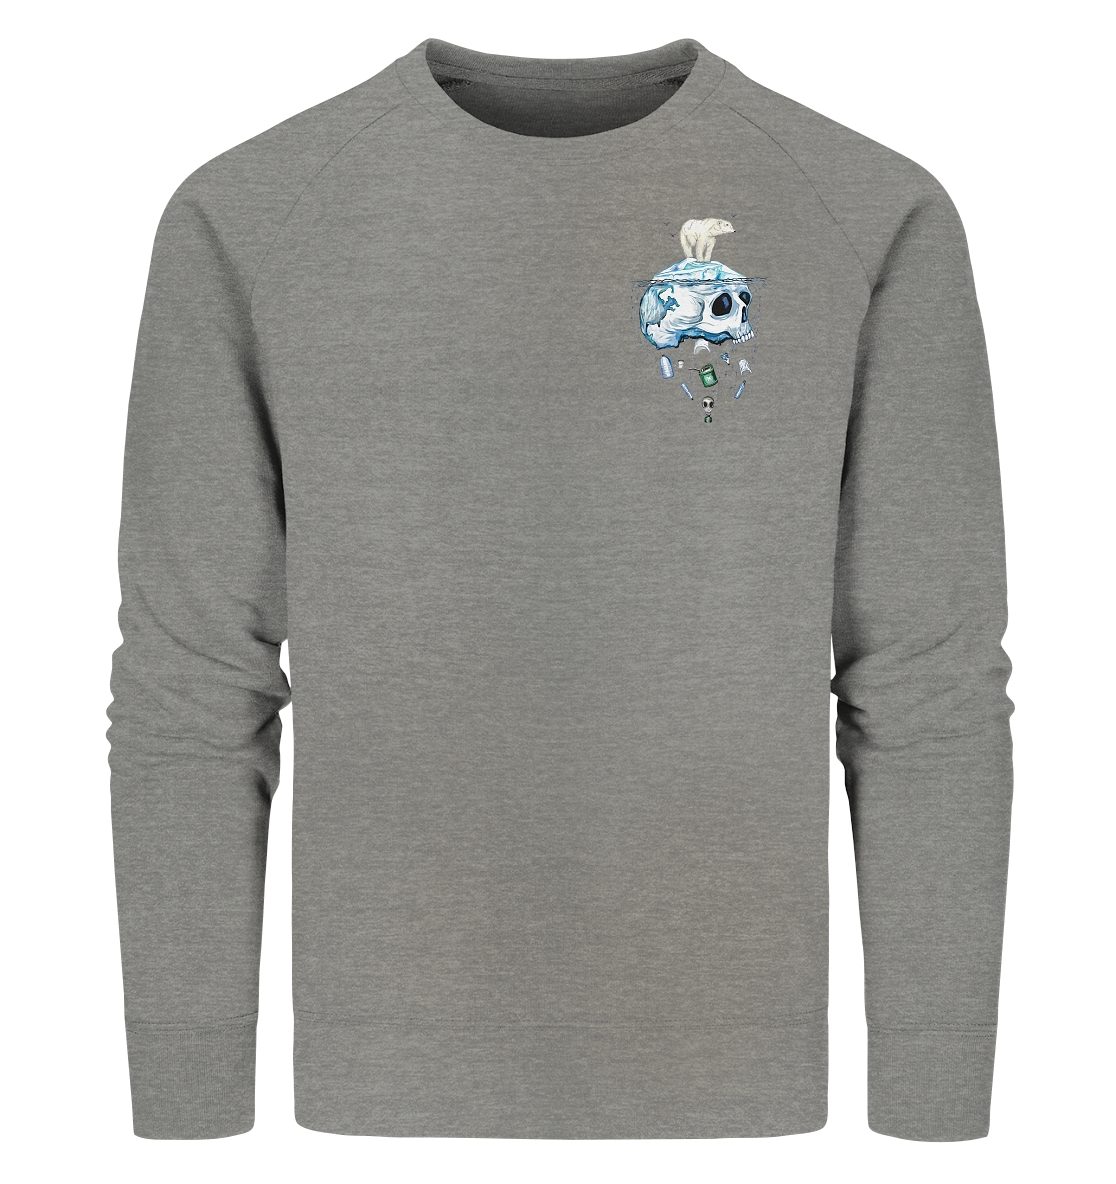 front-organic-sweatshirt-818381-1116x-2.png